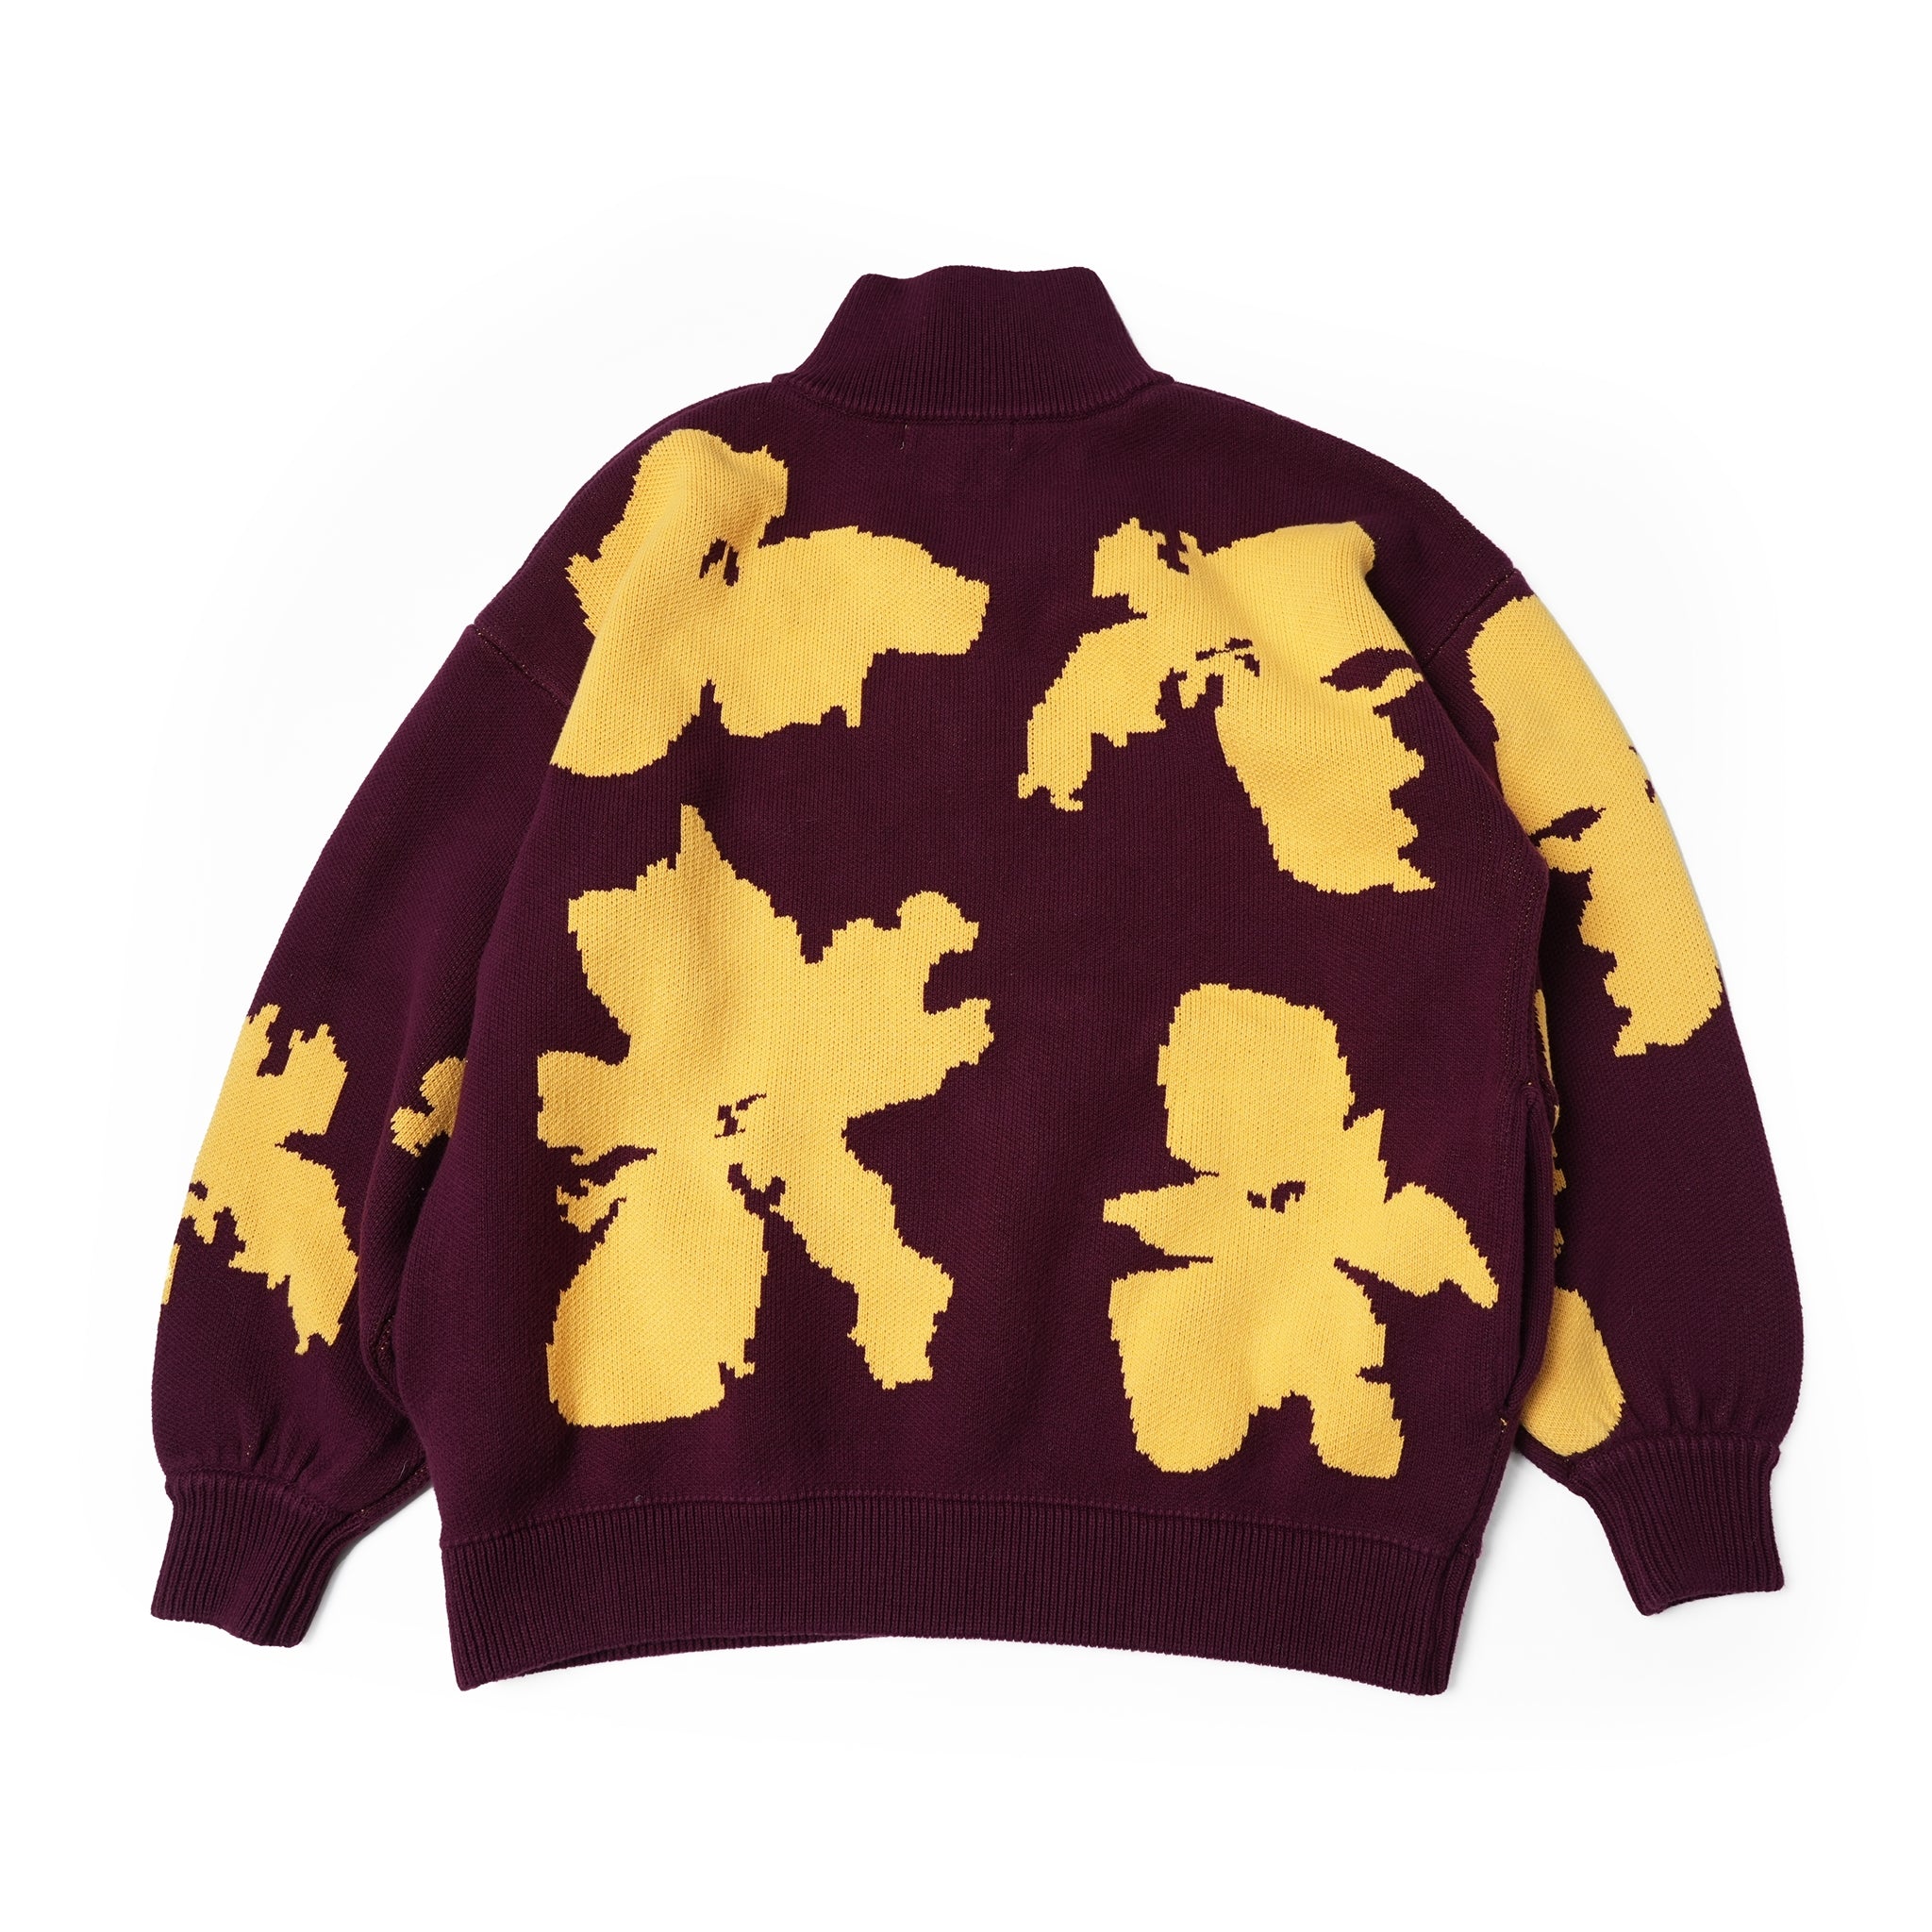 Name:Bicolor Half Zip Sweater | Color:Mulberry【AMBERGLEAM_アンバーグリーム】| No:1147131214